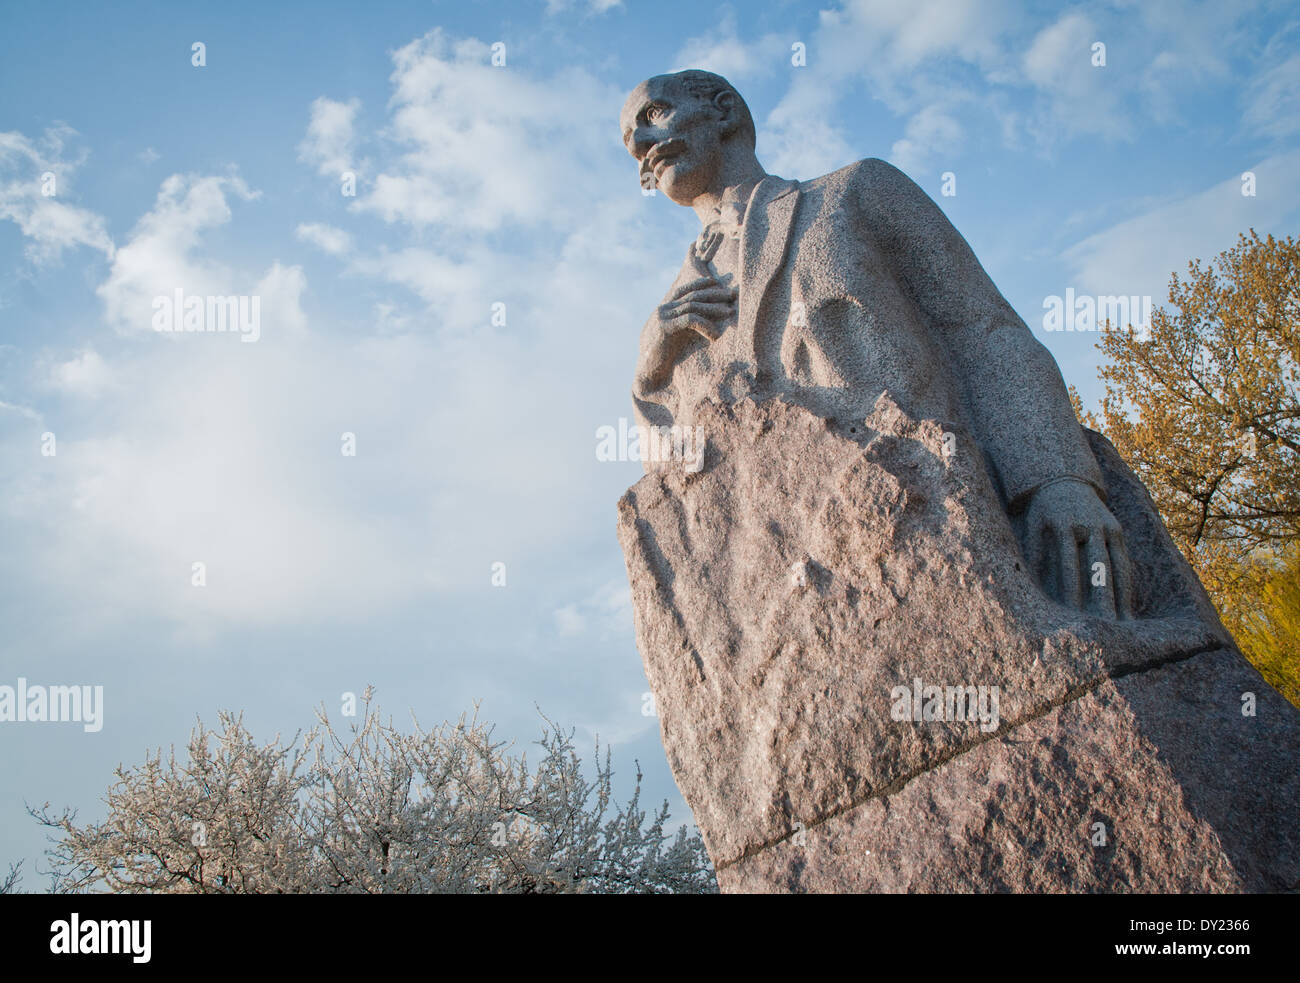 monument of Crimean Tatar publisher and politician Ismail Gasprinski (or Ismail Gaspirali) in Simferopol, Crimea Stock Photo